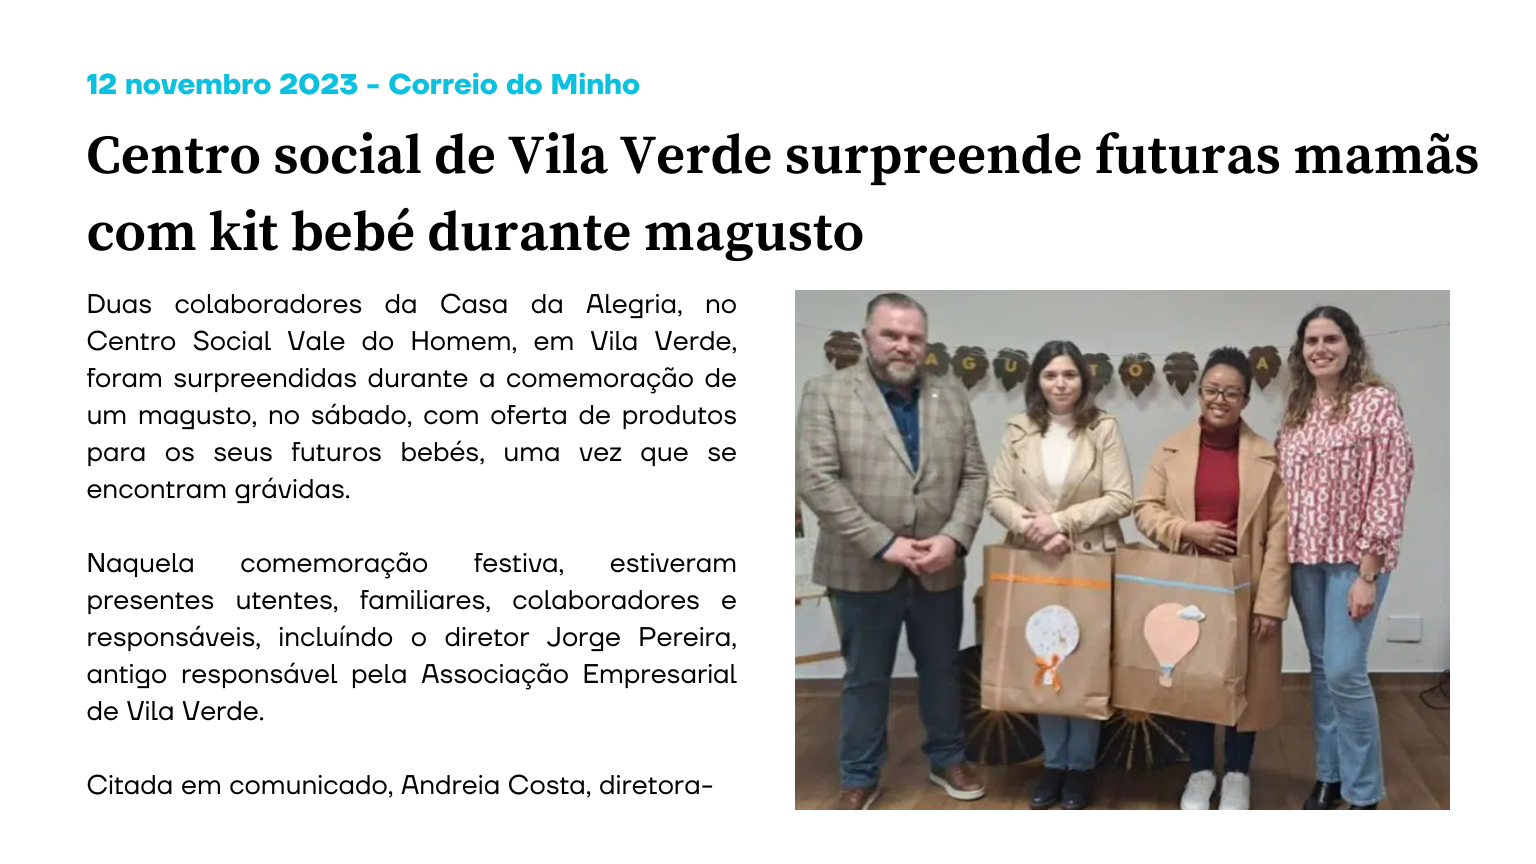 Centro social de Vila Verde surpreende futuras mamãs com kit bebé durante magusto